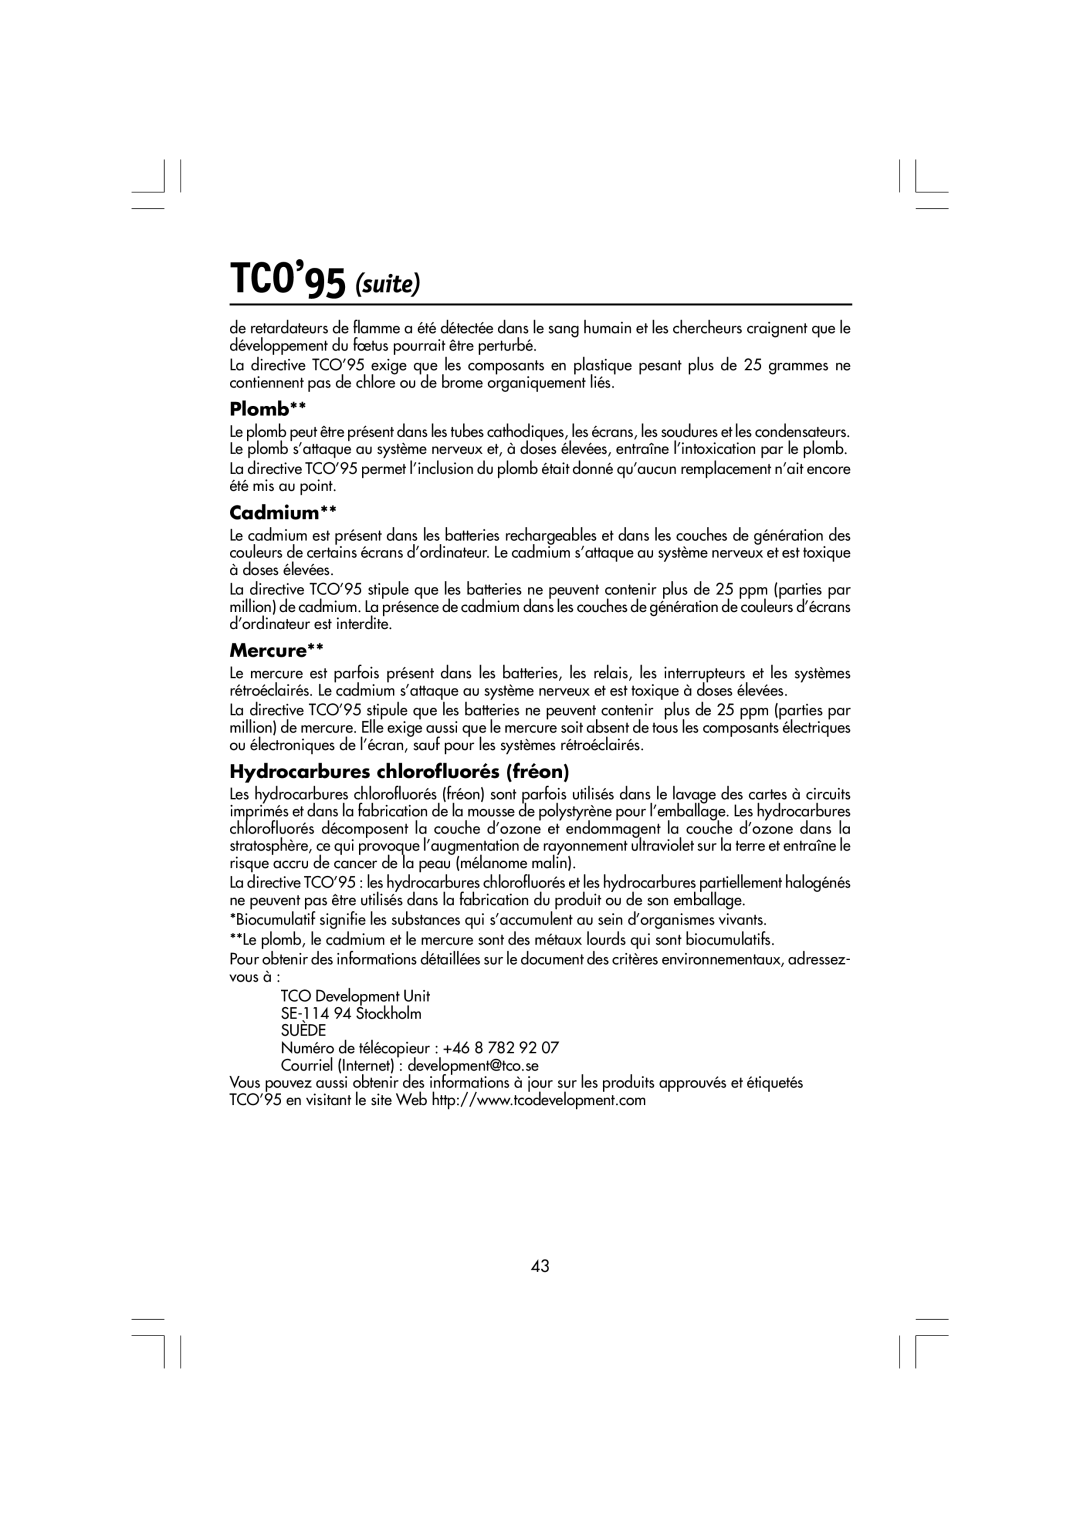 Mitsubishi Electronics LCD1560M manual TCO’95 suite, Plomb, Cadmium, Mercure, Hydrocarbures chlorofluorés fréon 